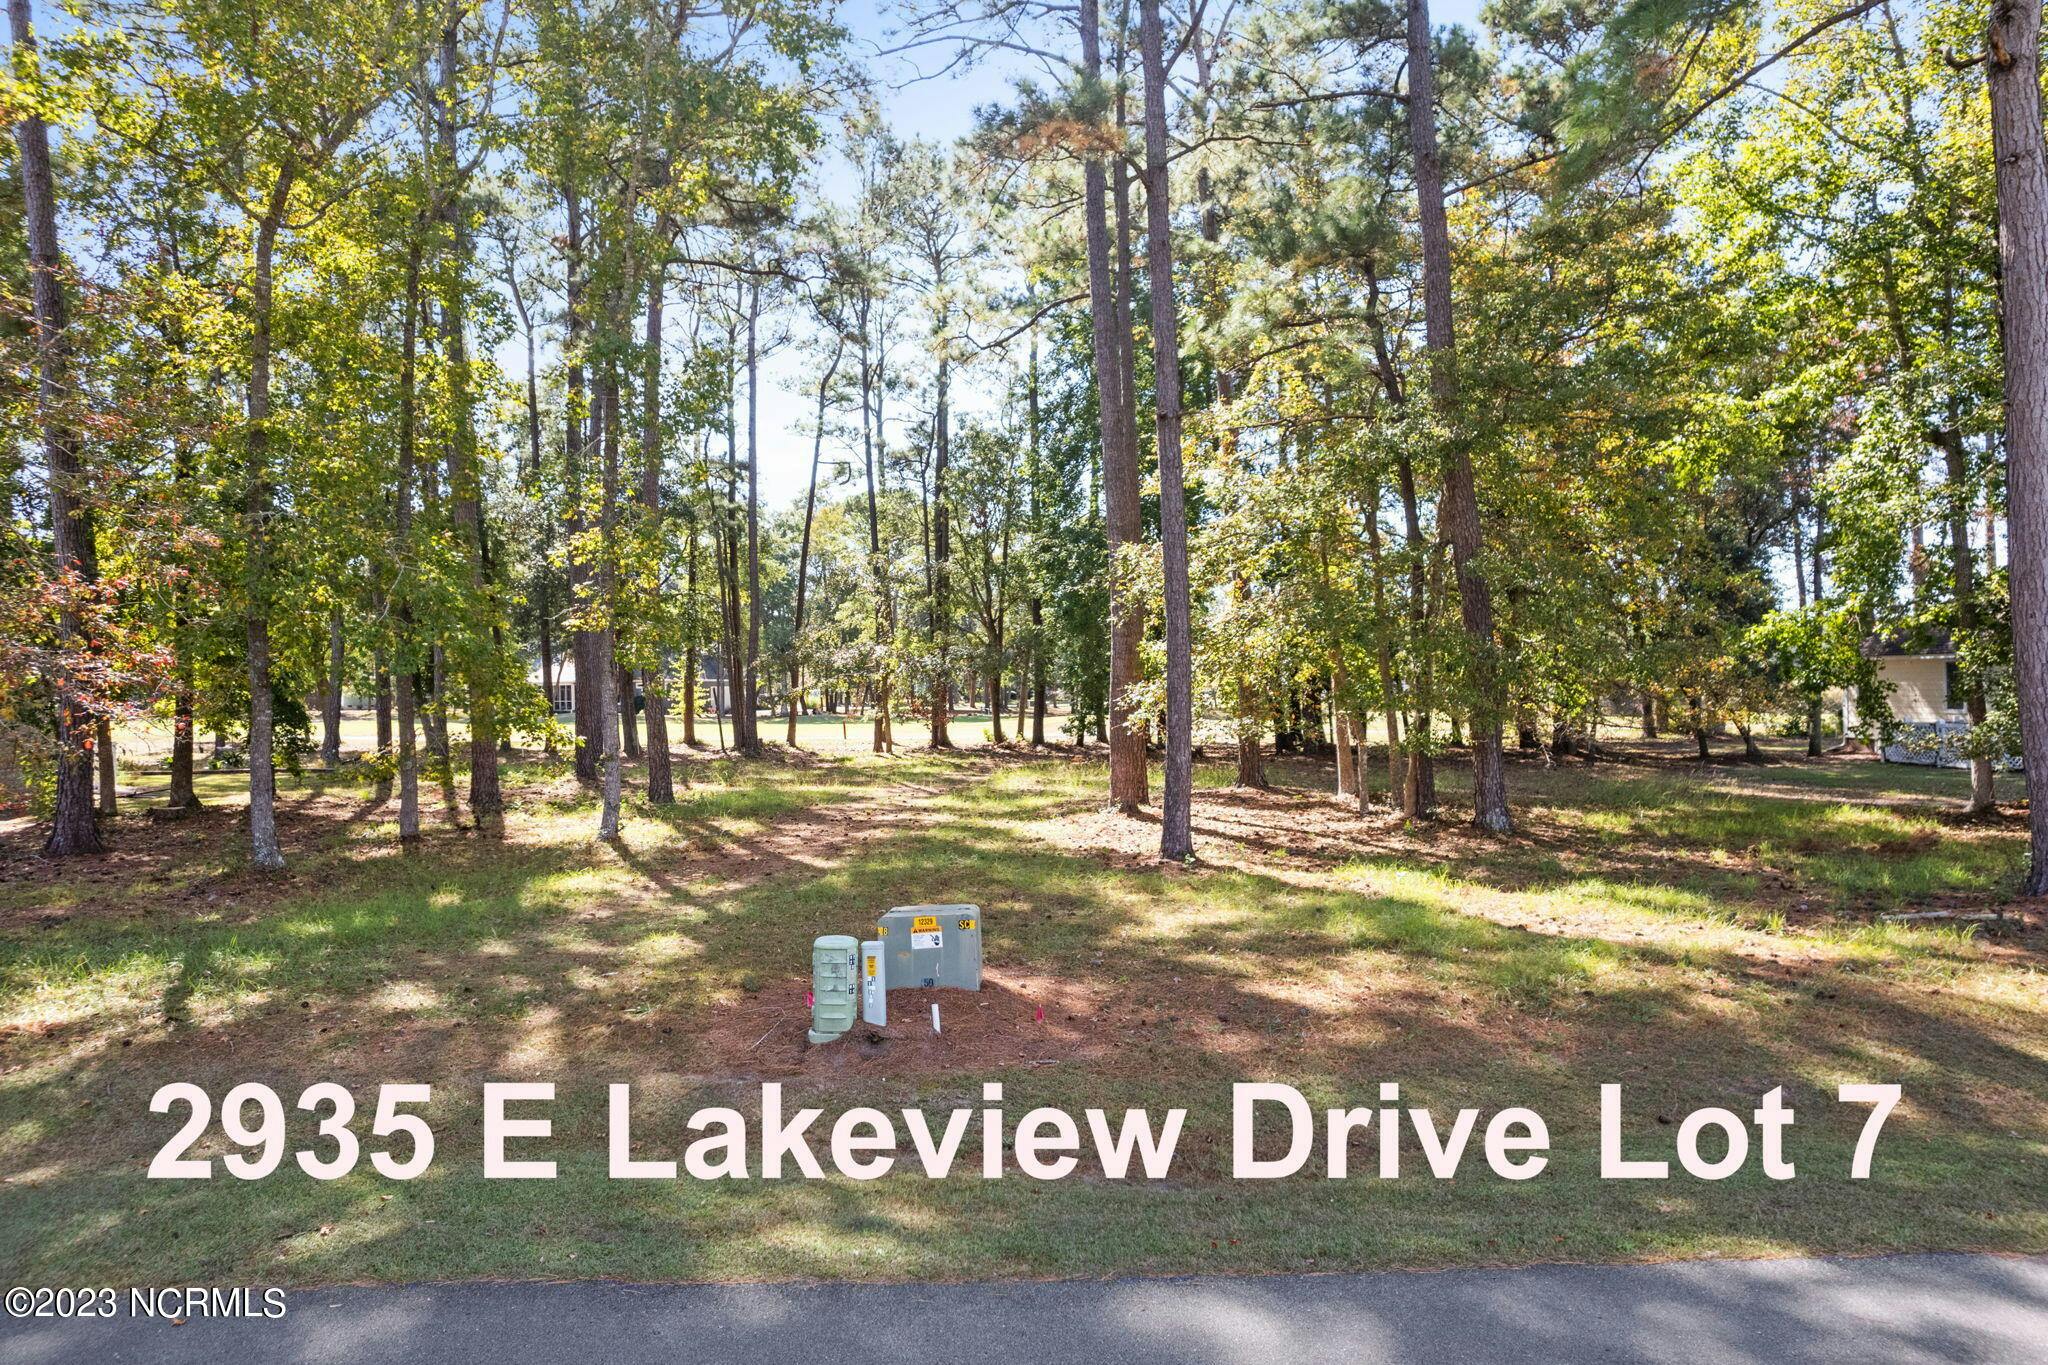 2935 E Lakeview Drive Lot 7